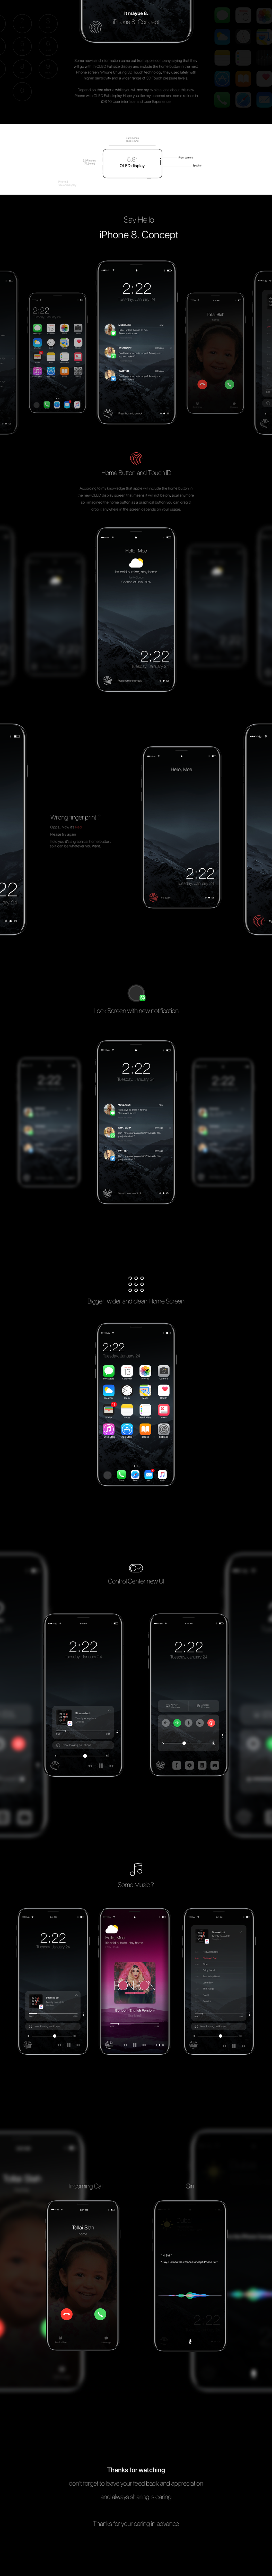 iphone-8-concept-mode-sombre